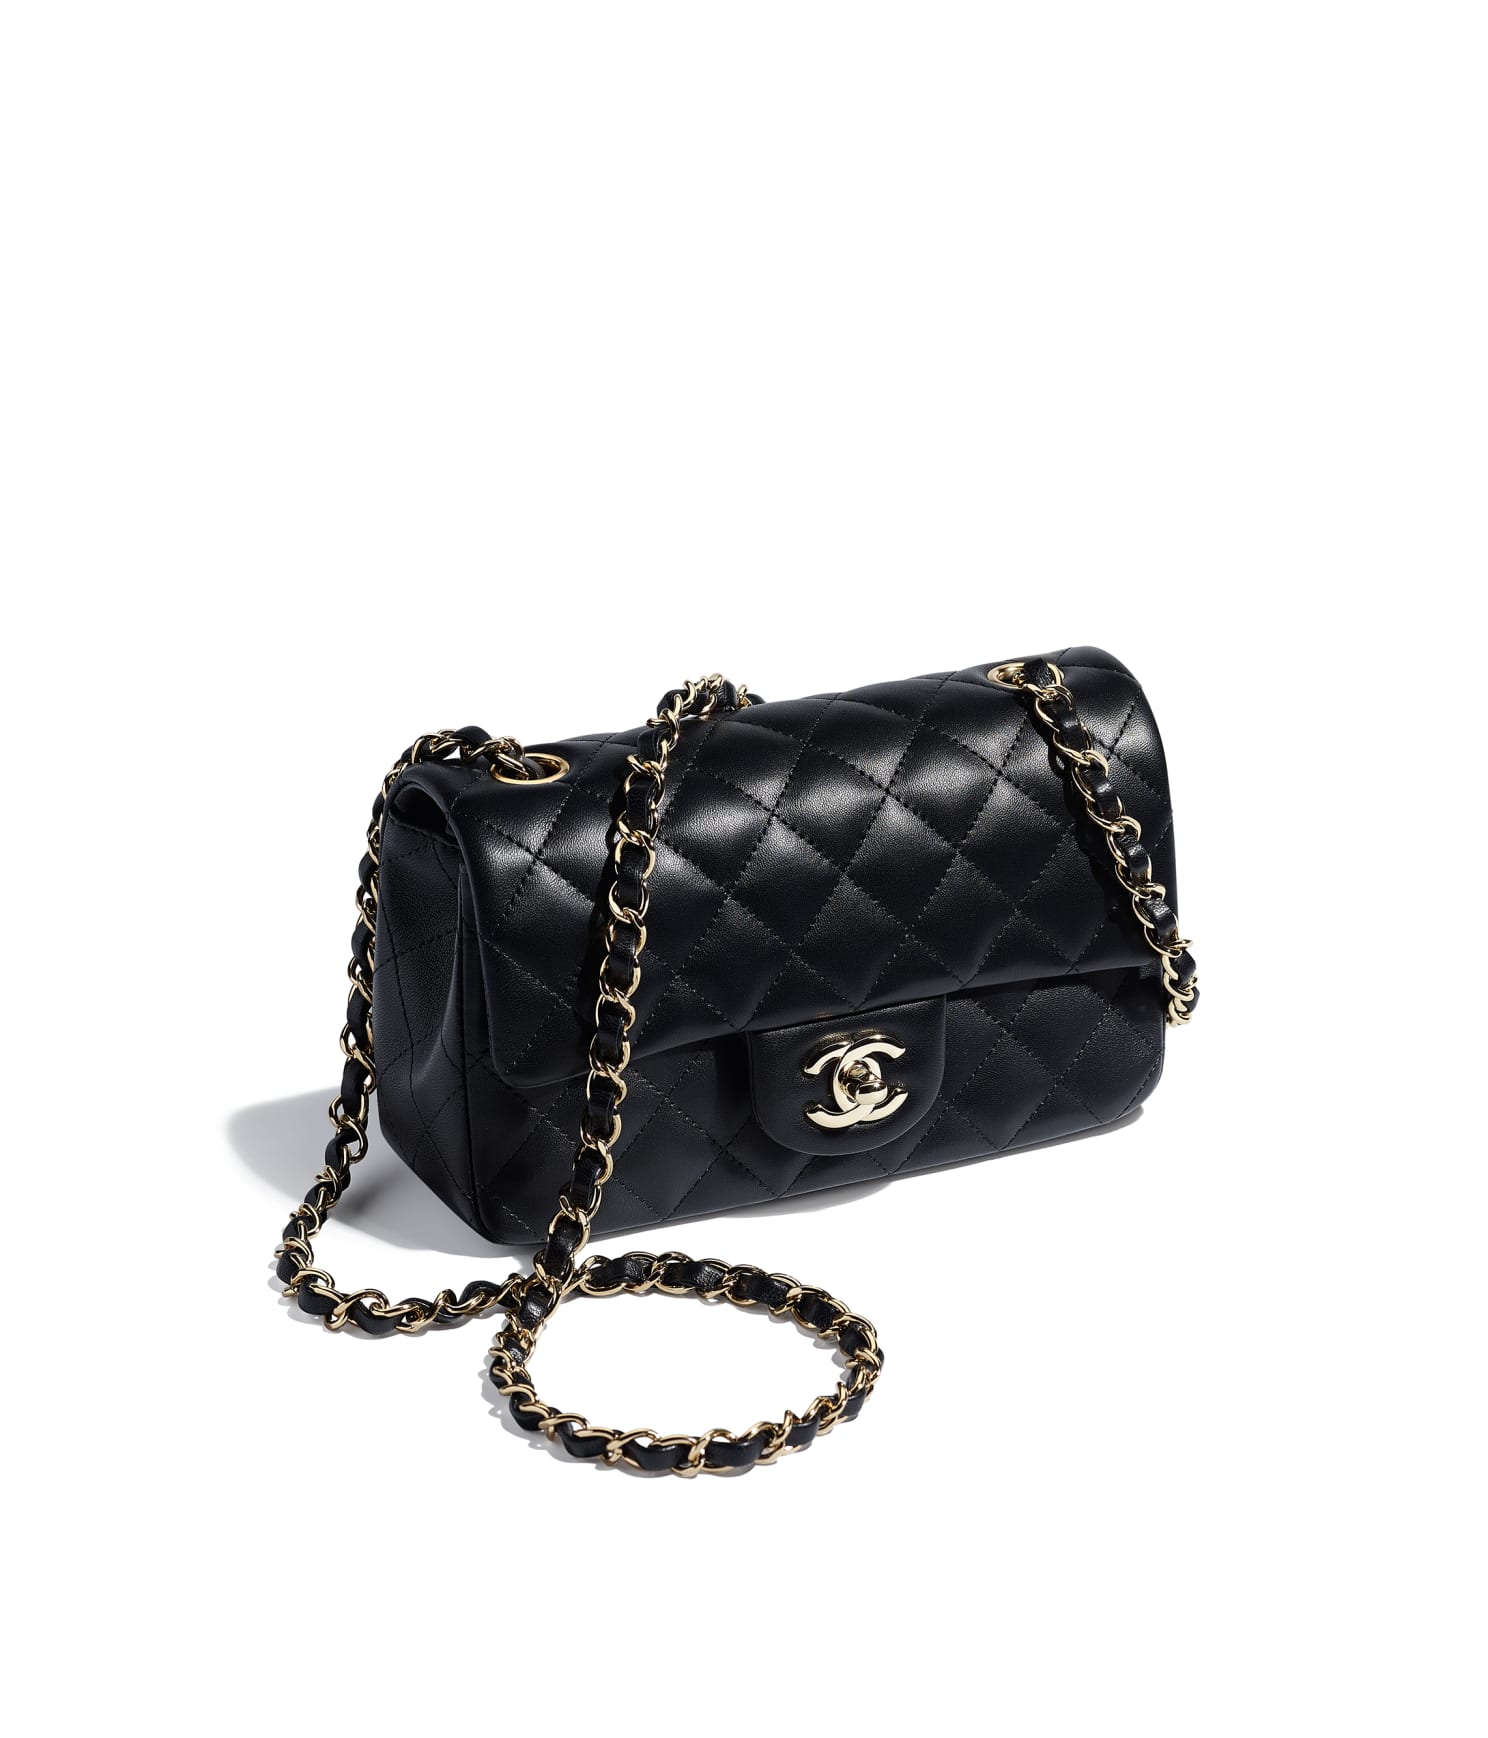 Chanel Flap Bag Feature Photo